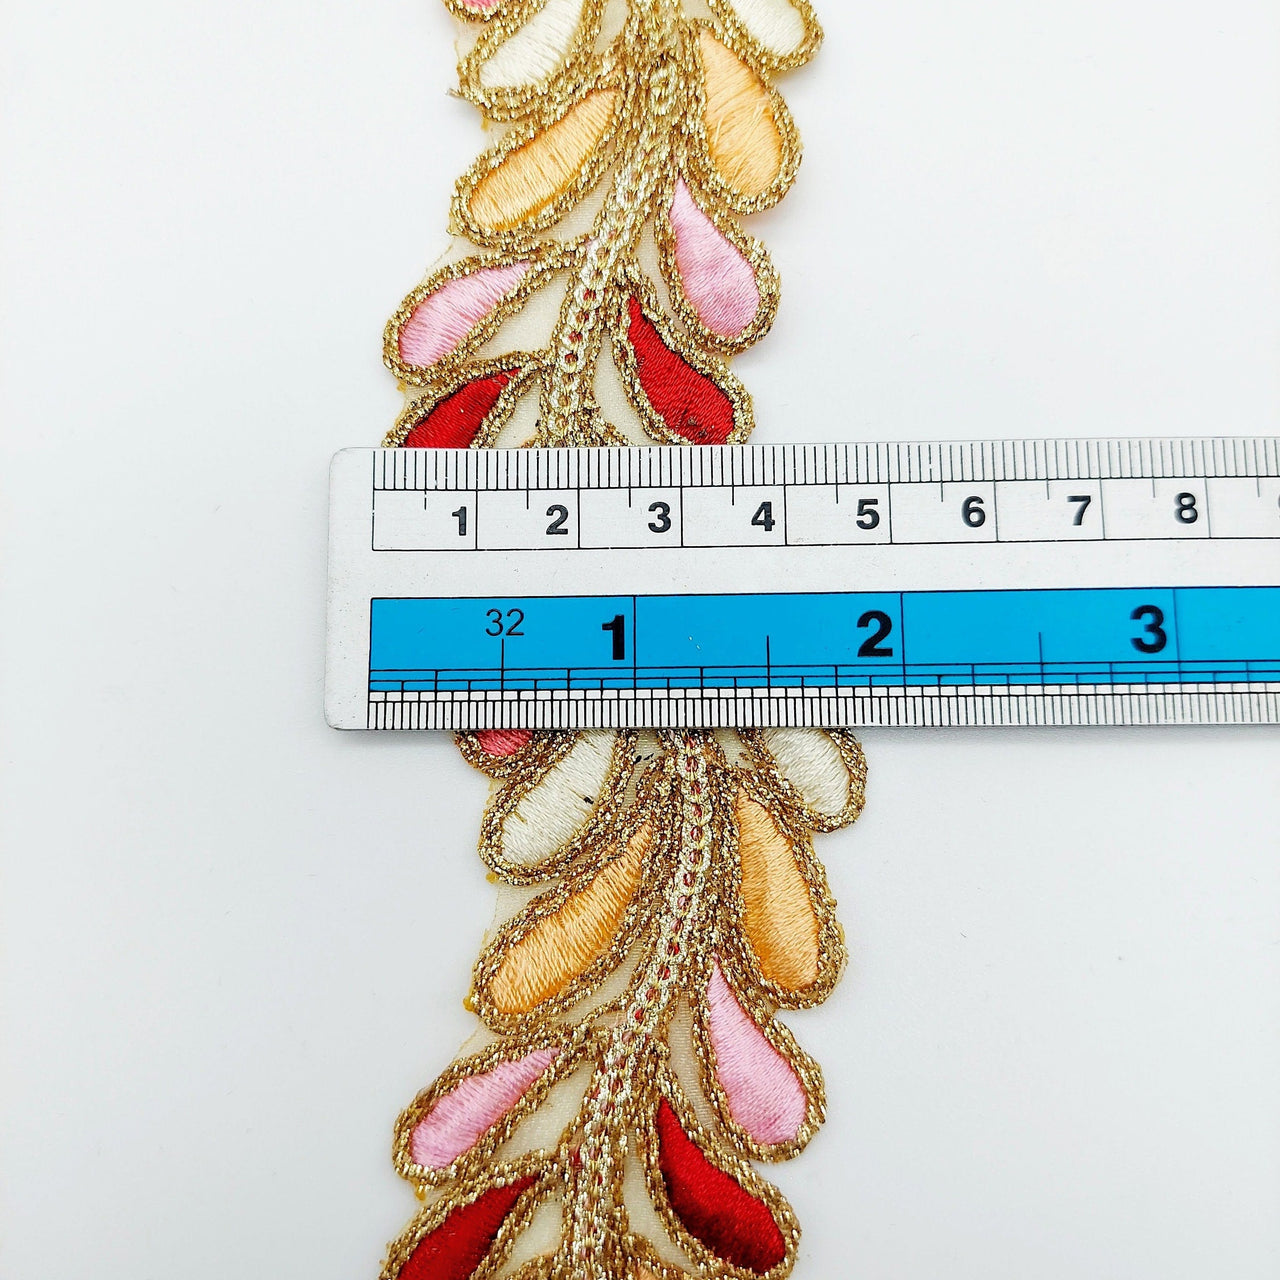 9 Yards Sheer Gold Tissue Embroidered Trim, Decorative Trim, Indian Sari Border Sequin Trimming